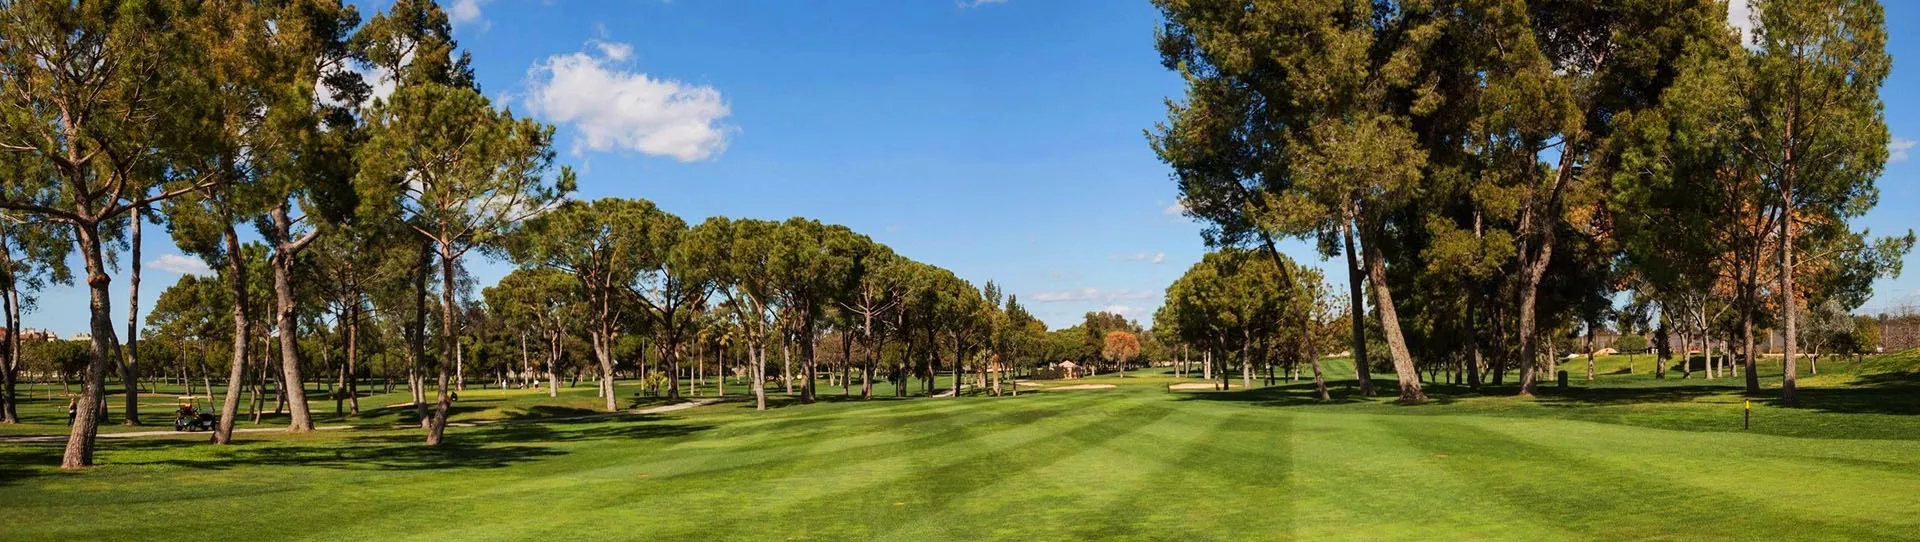 Spain golf courses - Real Club Pineda de Sevilla - Photo 1